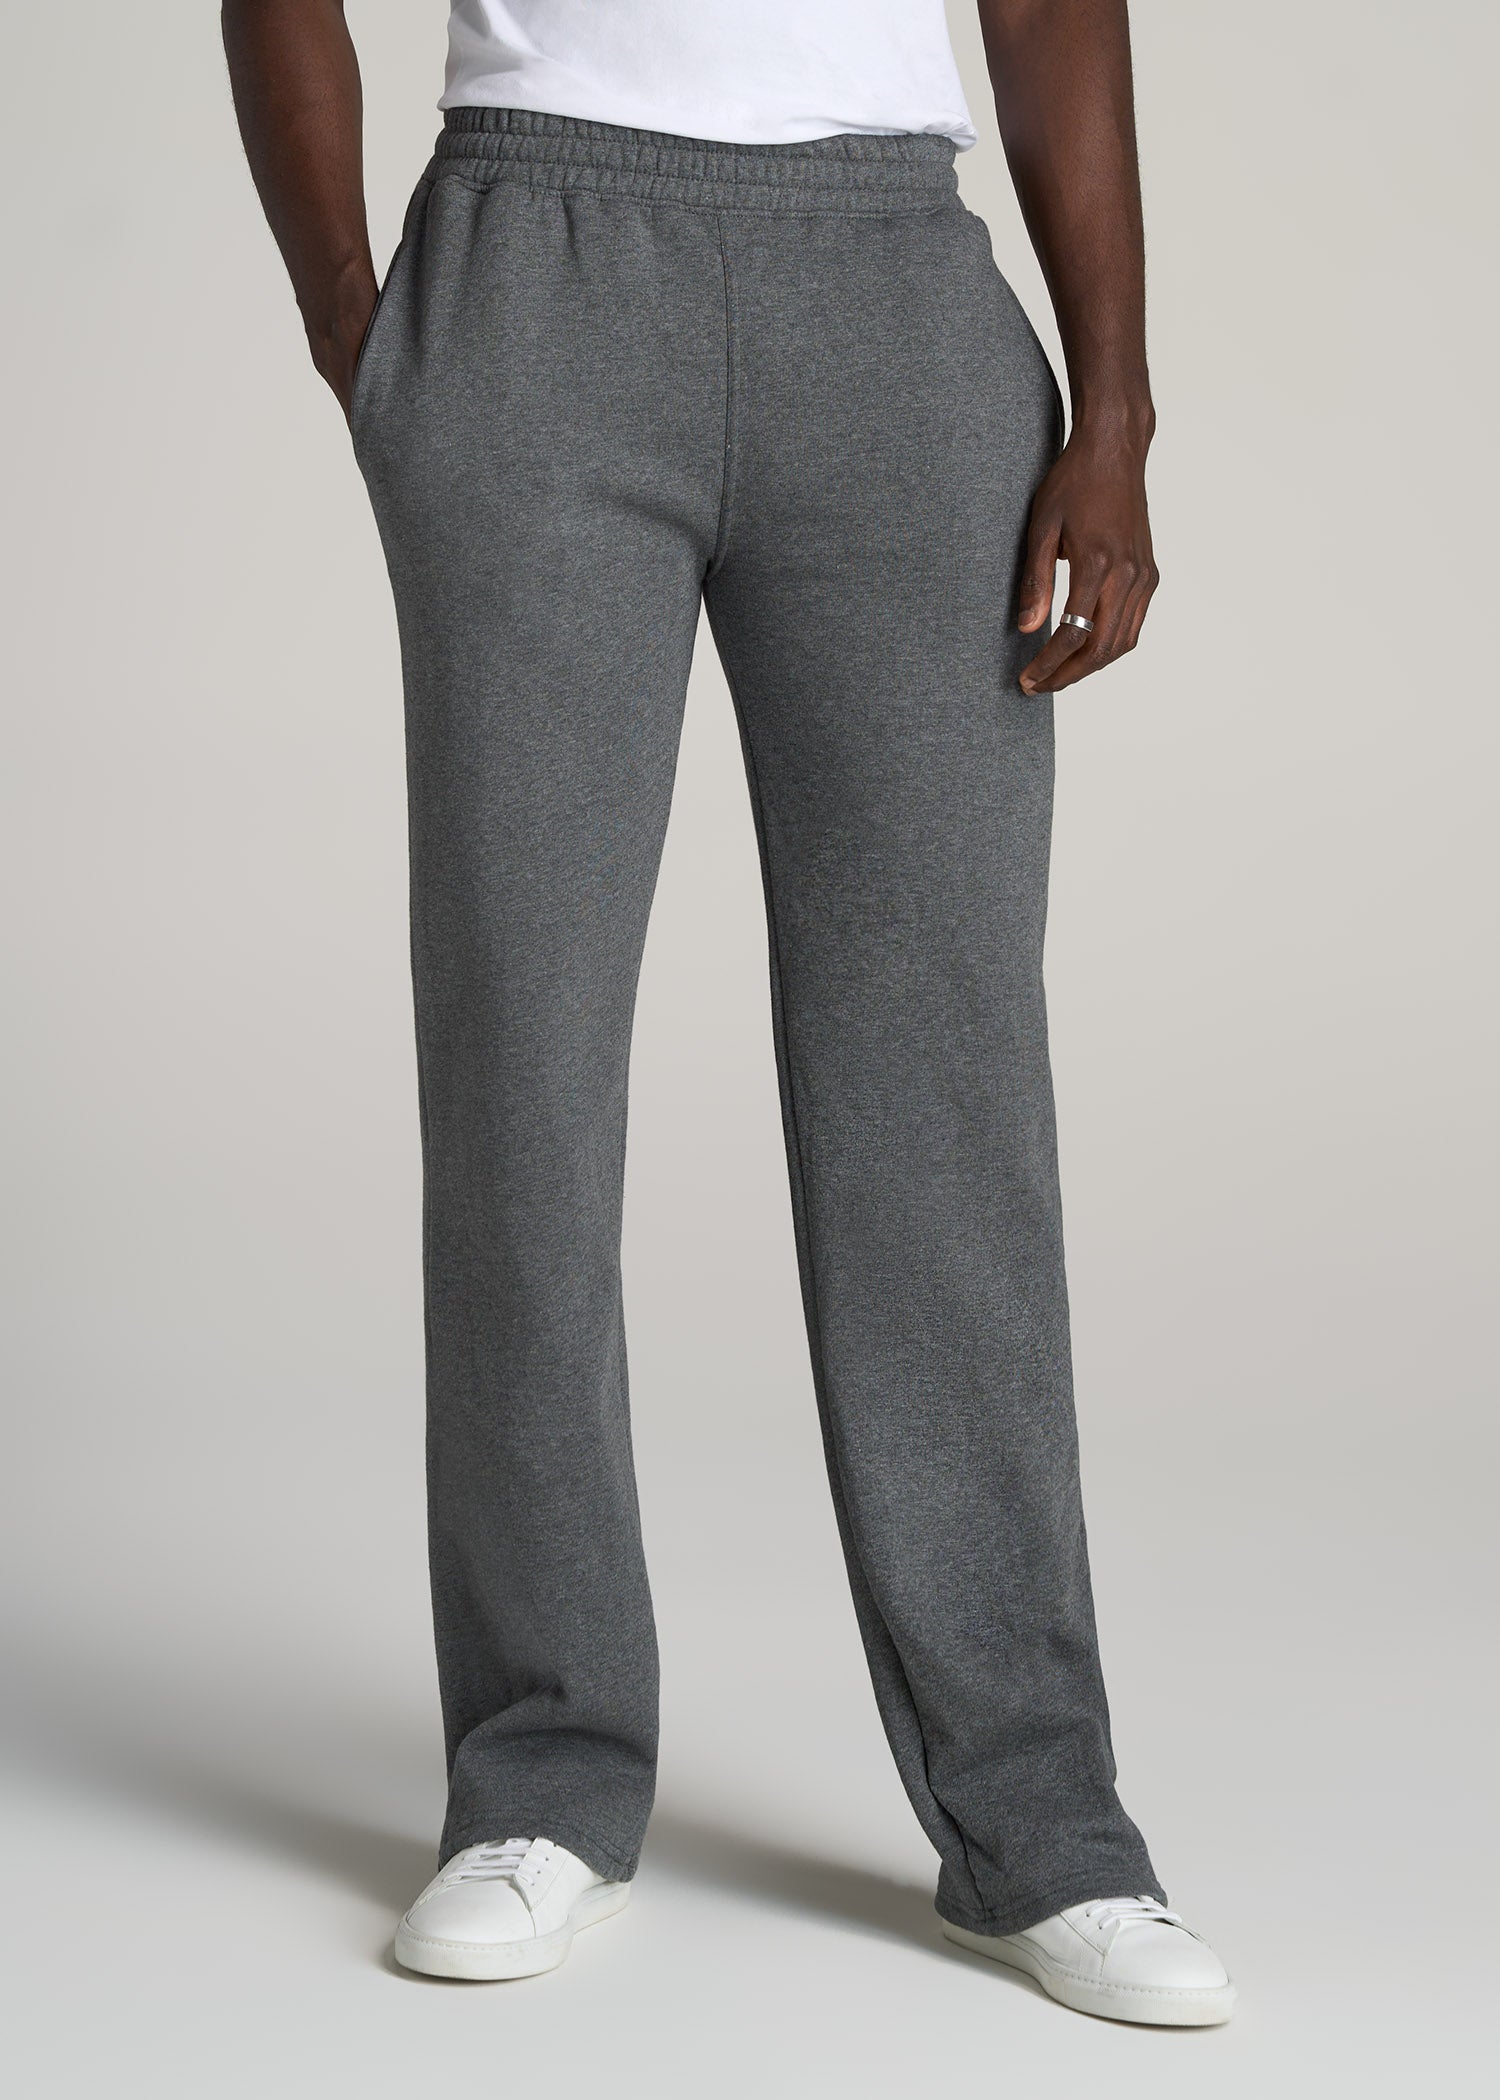 Men's Grey Sweatpants